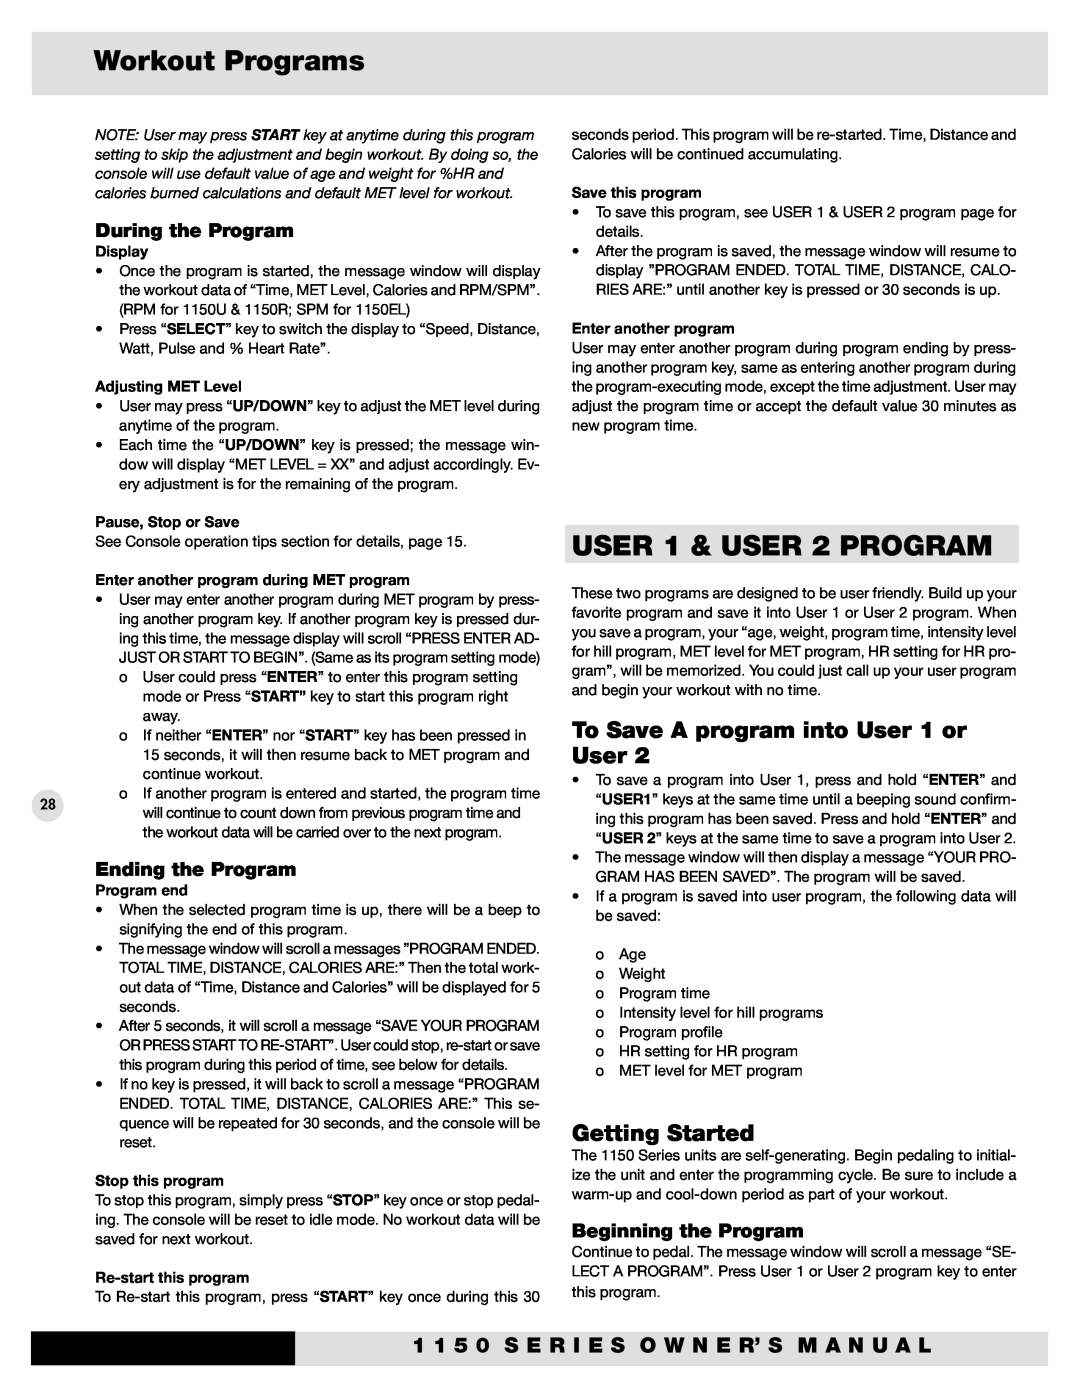 Diamondback 1150UI manual USER 1 & USER 2 PROGRAM, To Save A program into User 1 or User, Workout Programs, Getting Started 